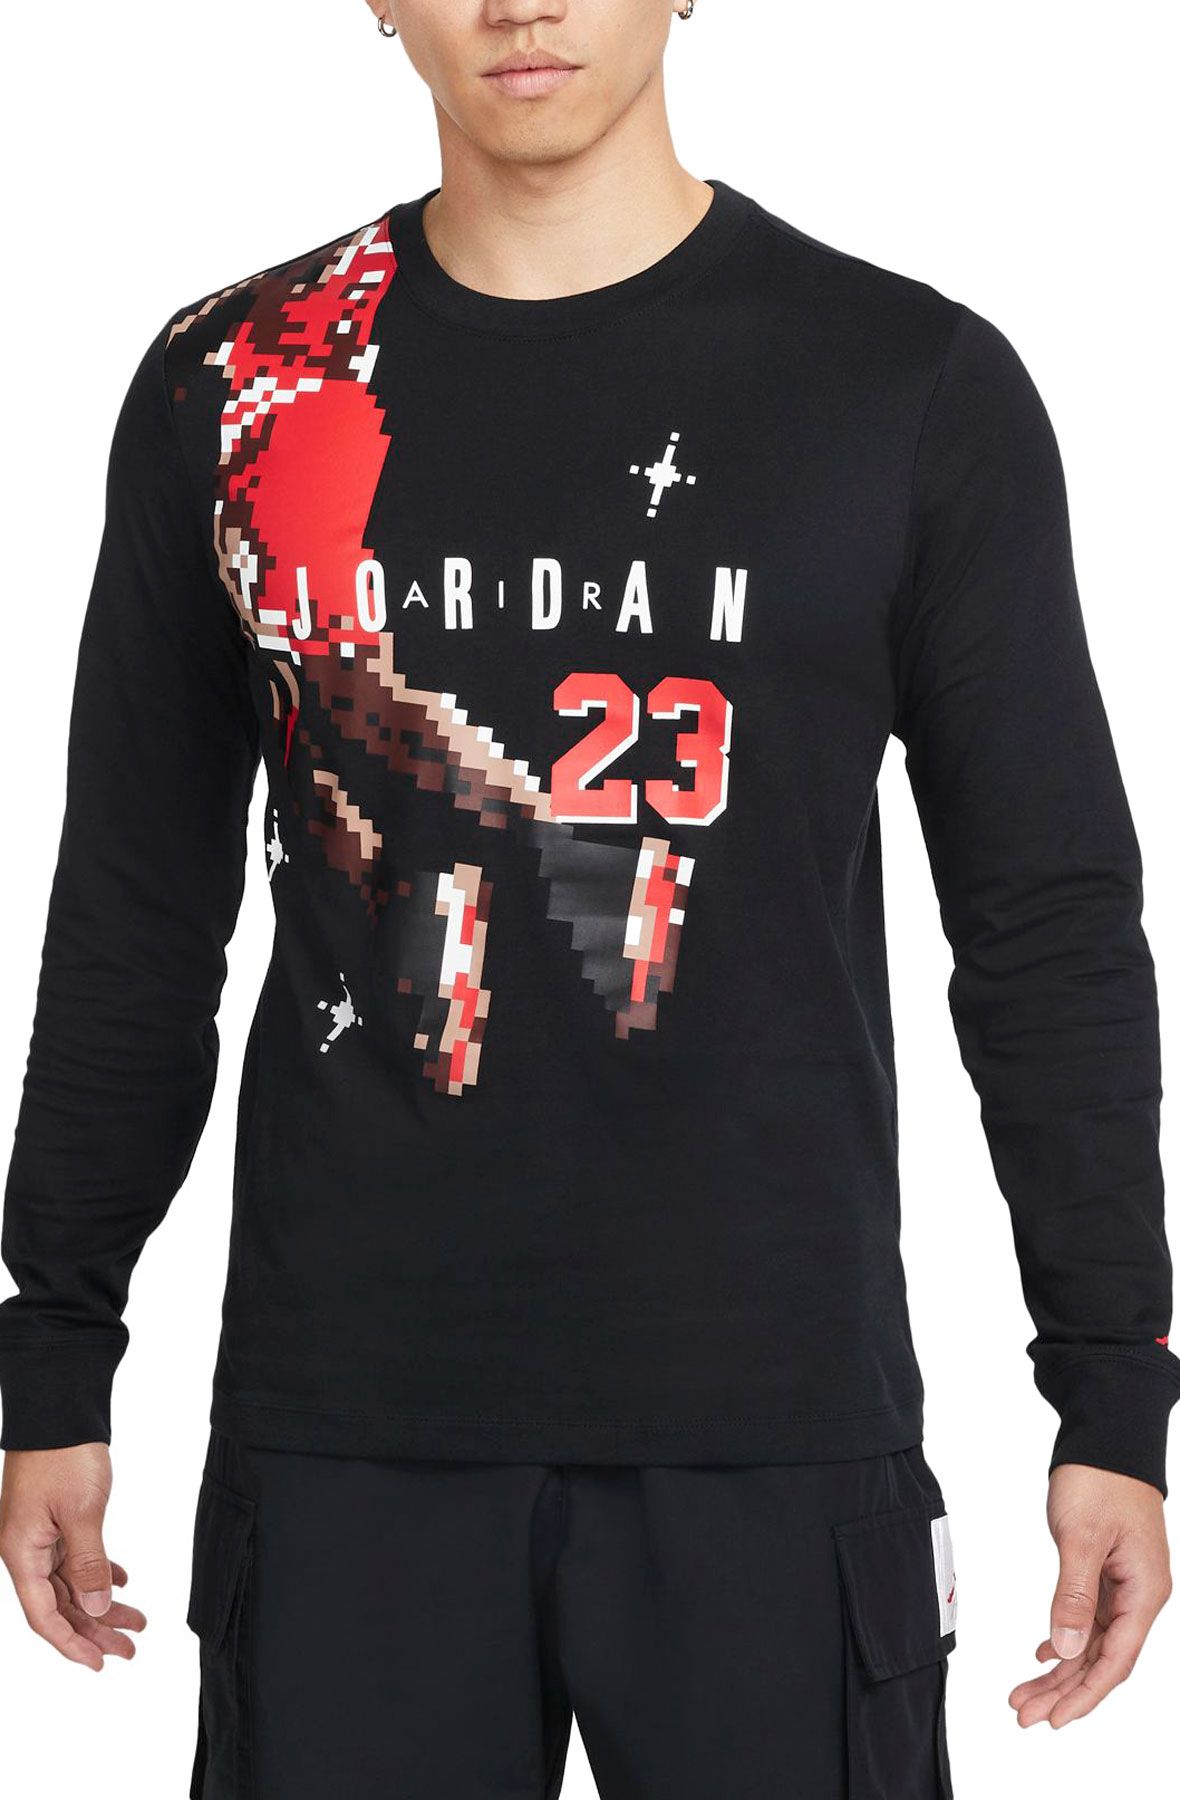 Chicago Goat Jordan 23 Crewneck Sweatshirt Jersey Basketball 